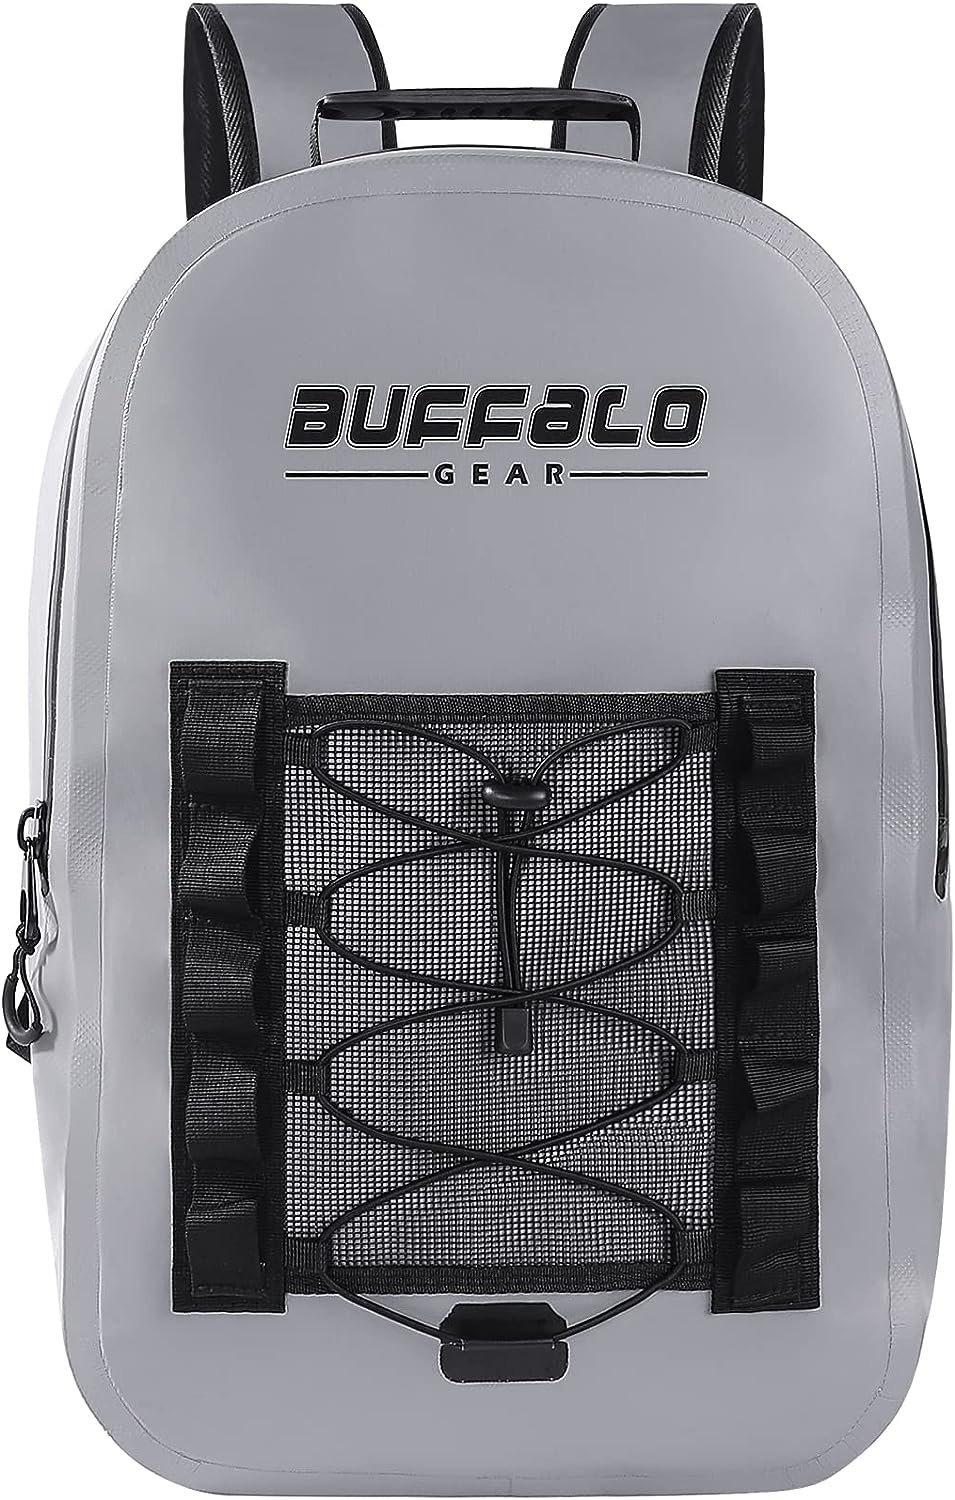 Buffalo Gear Waterproof Dry Bag Backpack Review